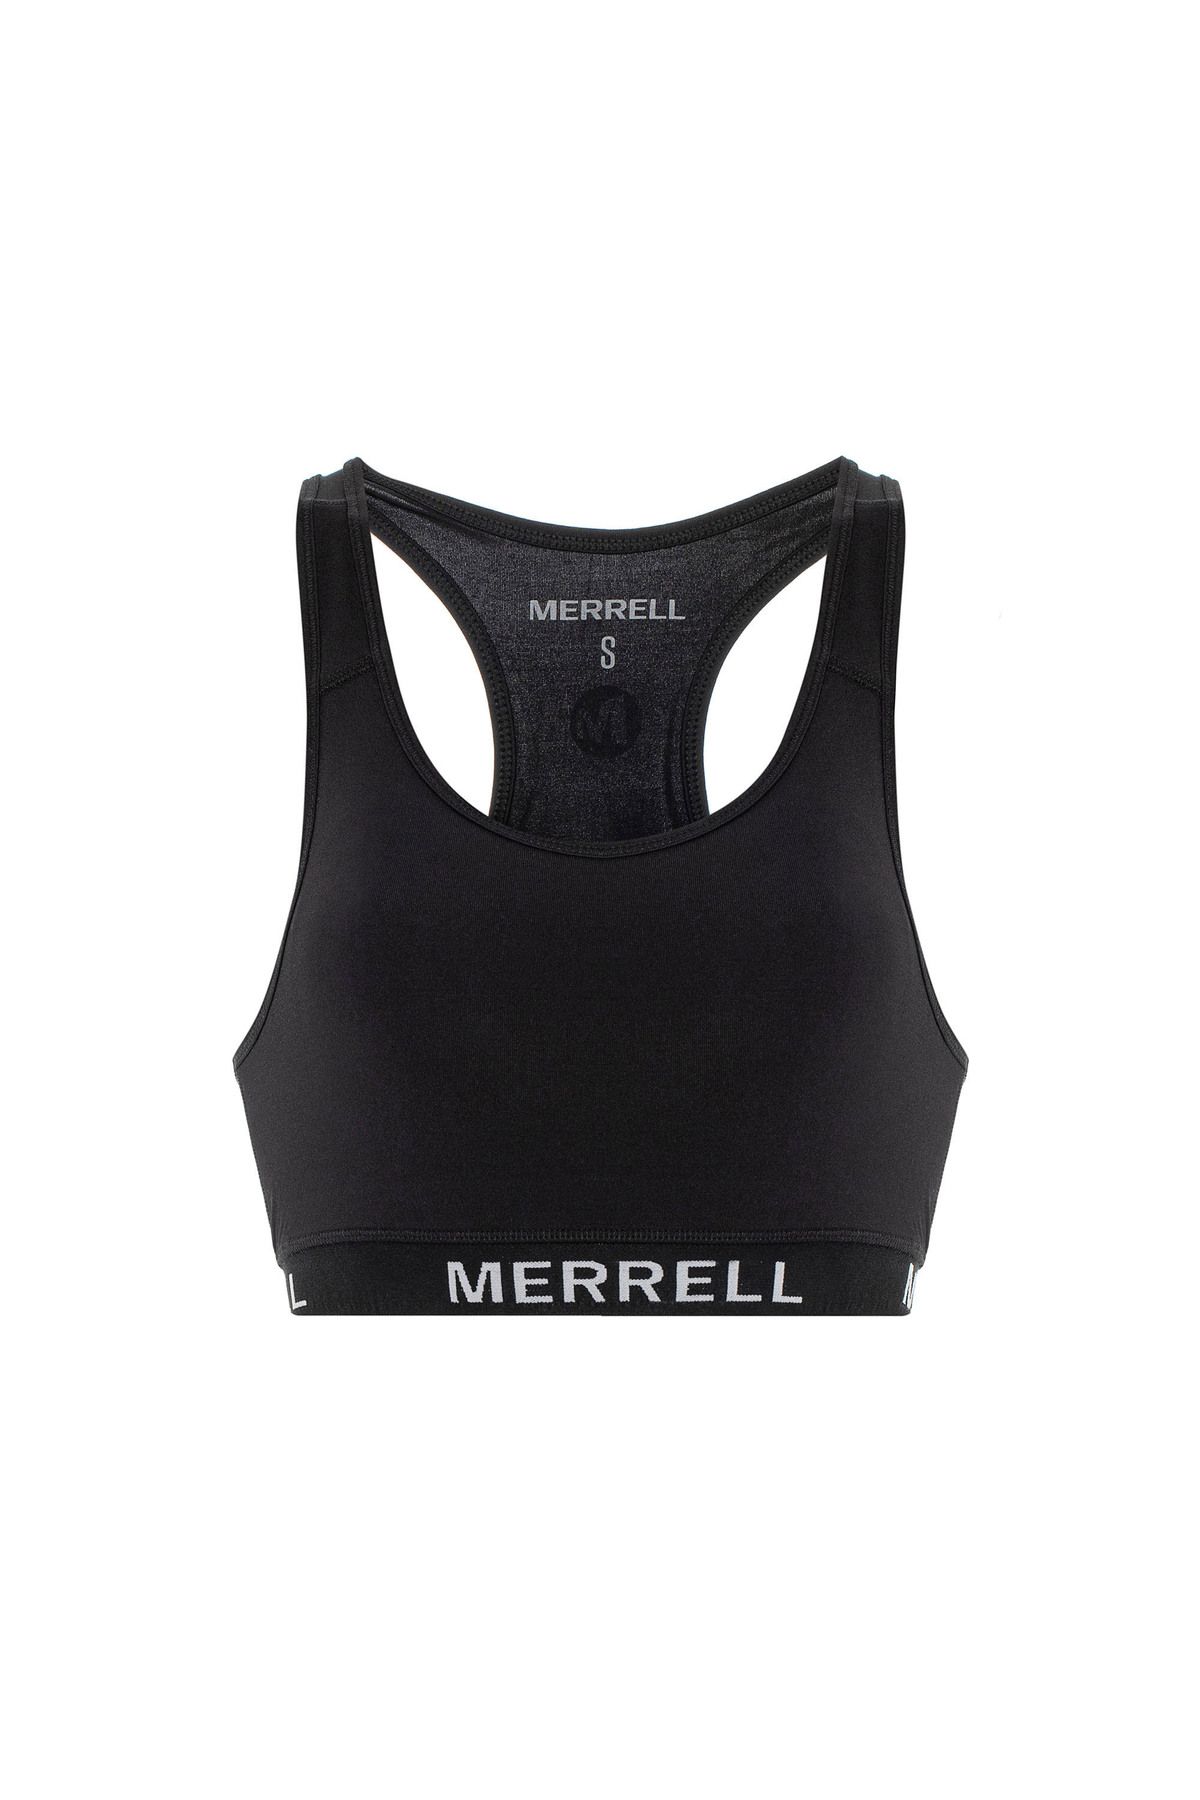 Merrell Begin Kadın Fitness Bra